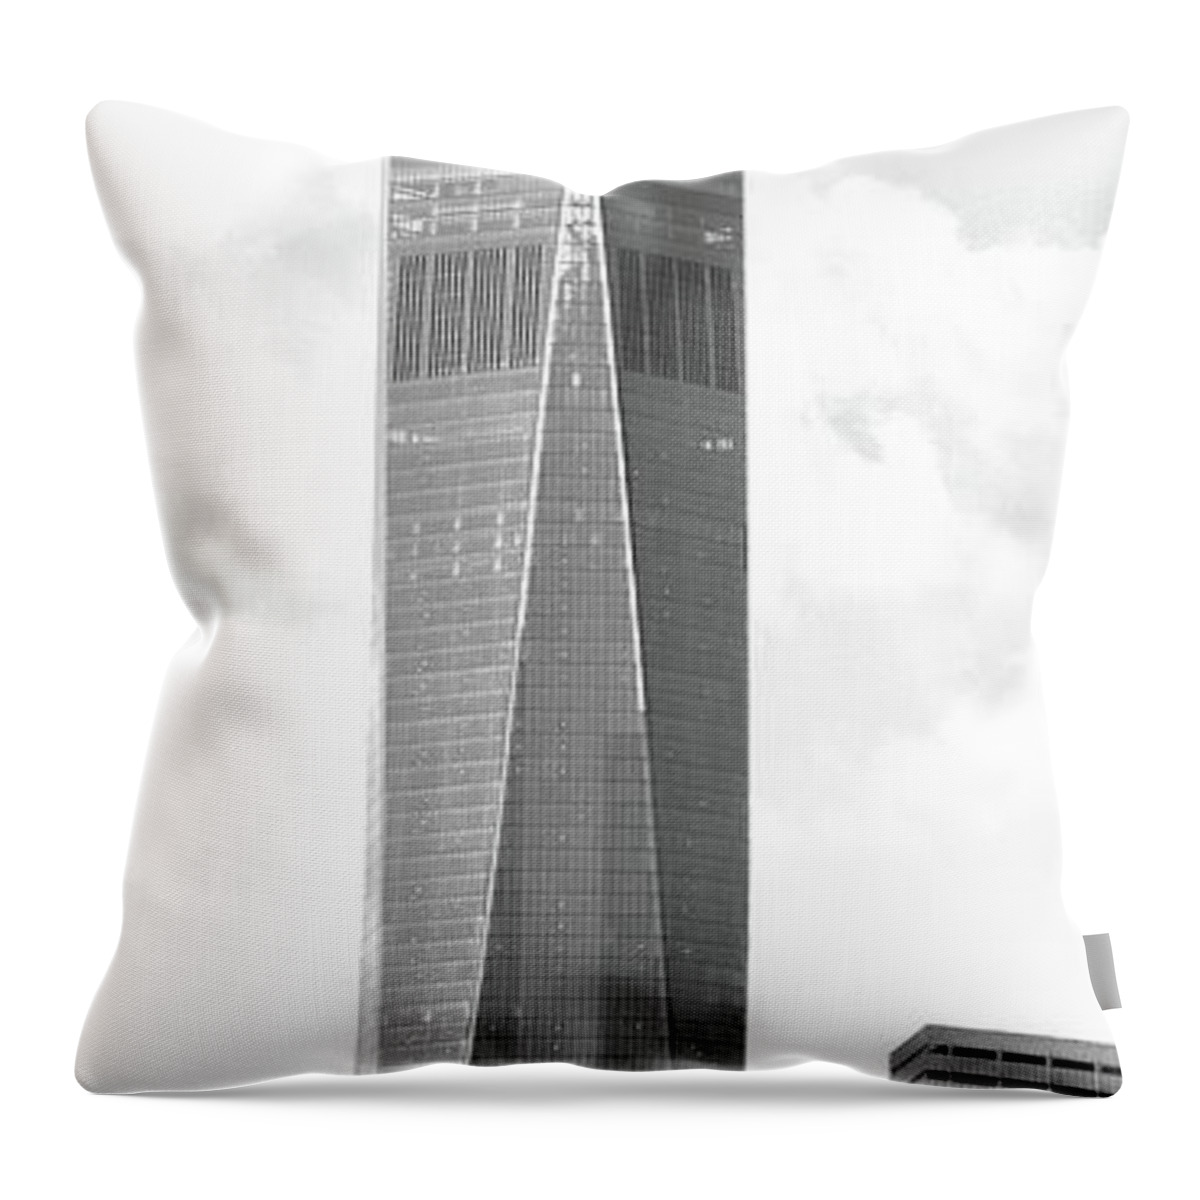 One World Trade Center Throw Pillow featuring the photograph One World Trade Center by Mitch Cat